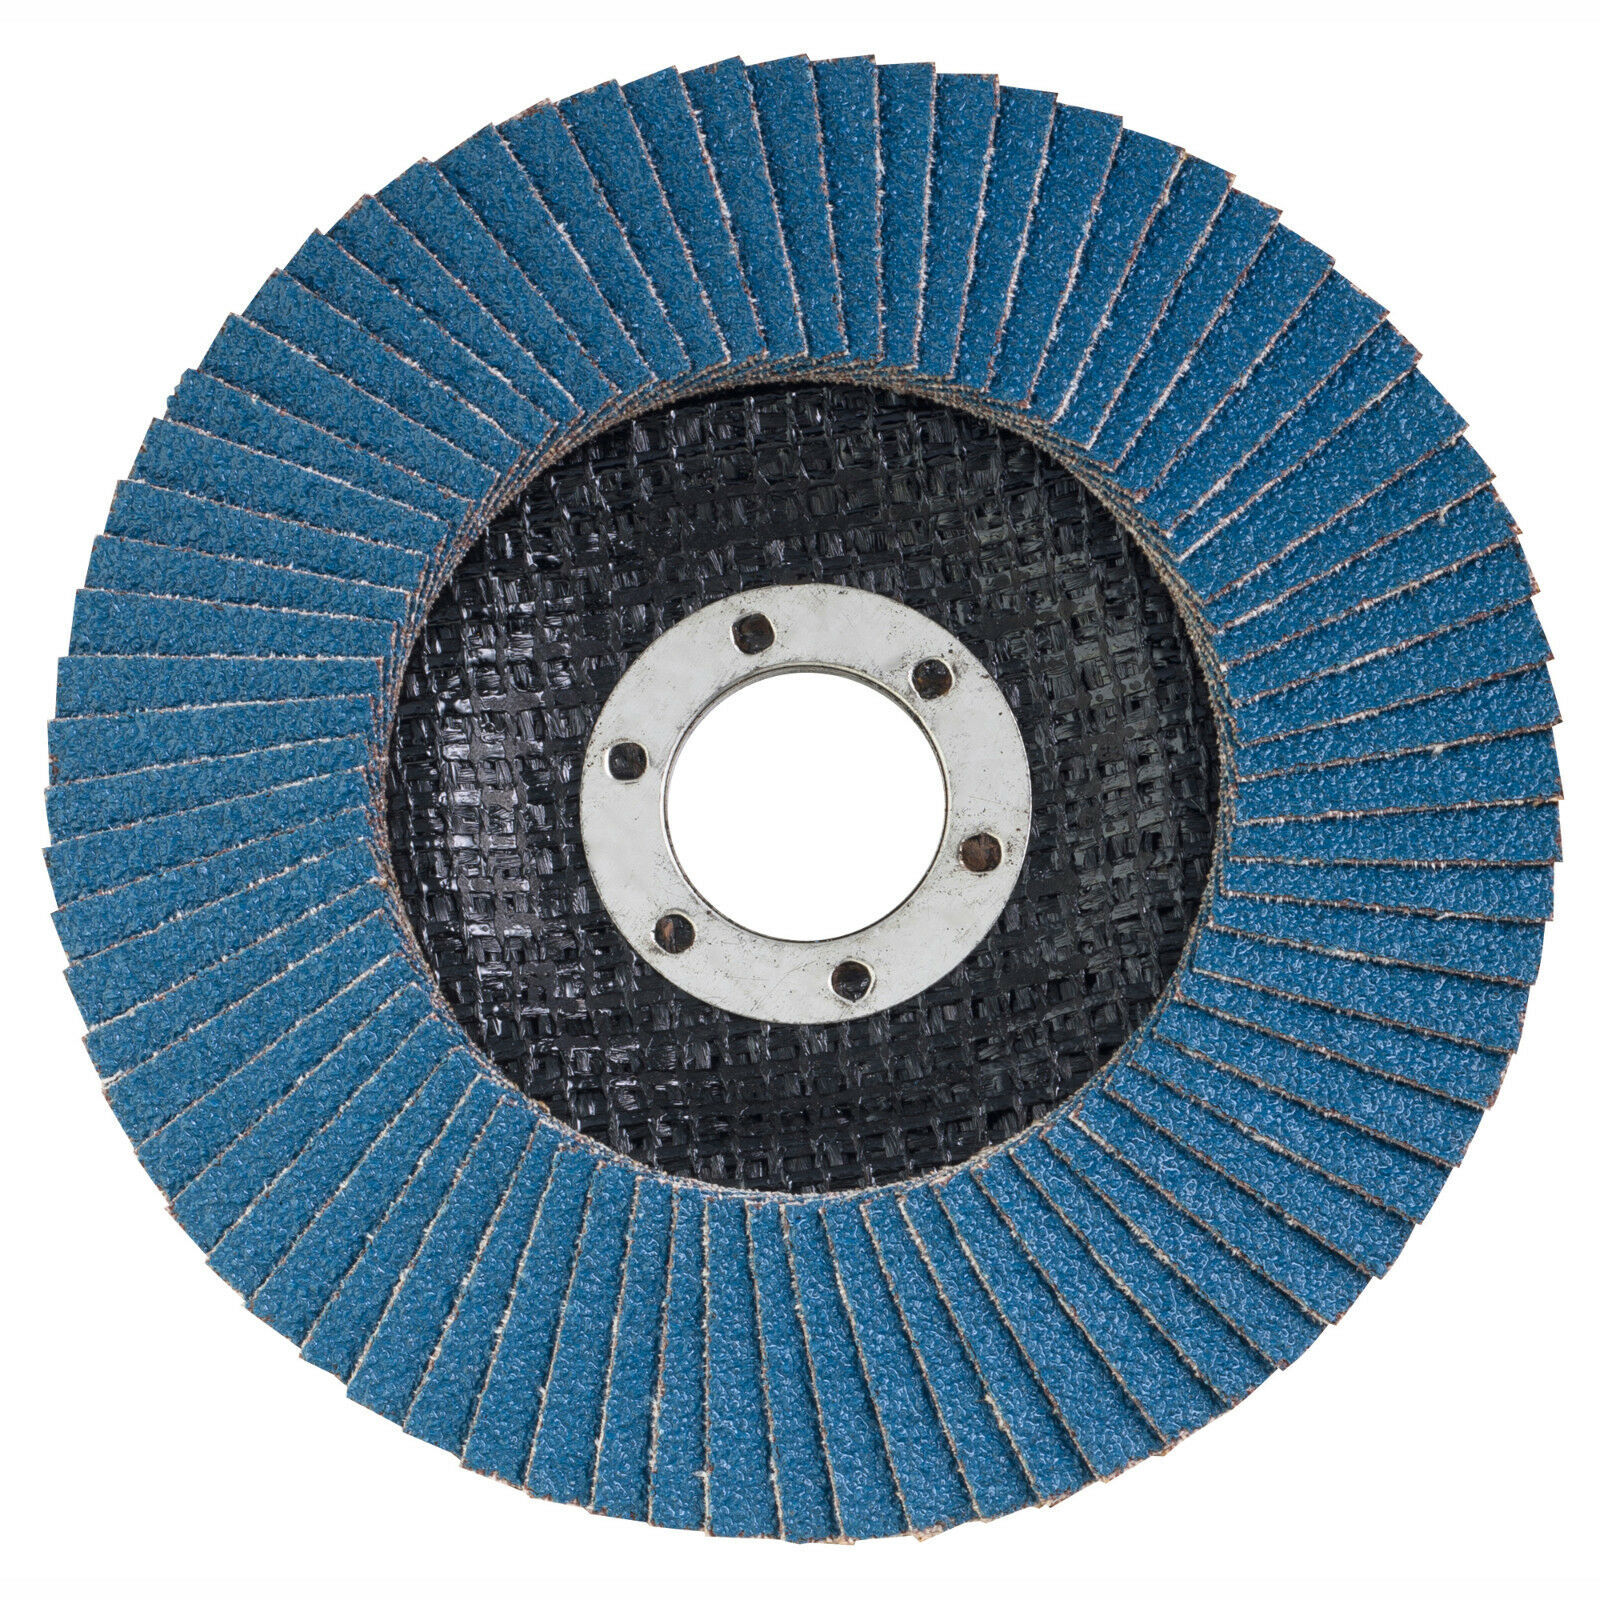 20 x  Abrasive 5'' 125MM Metal Sanding Flap Discs Angle Grinder Wheels 120 Grit